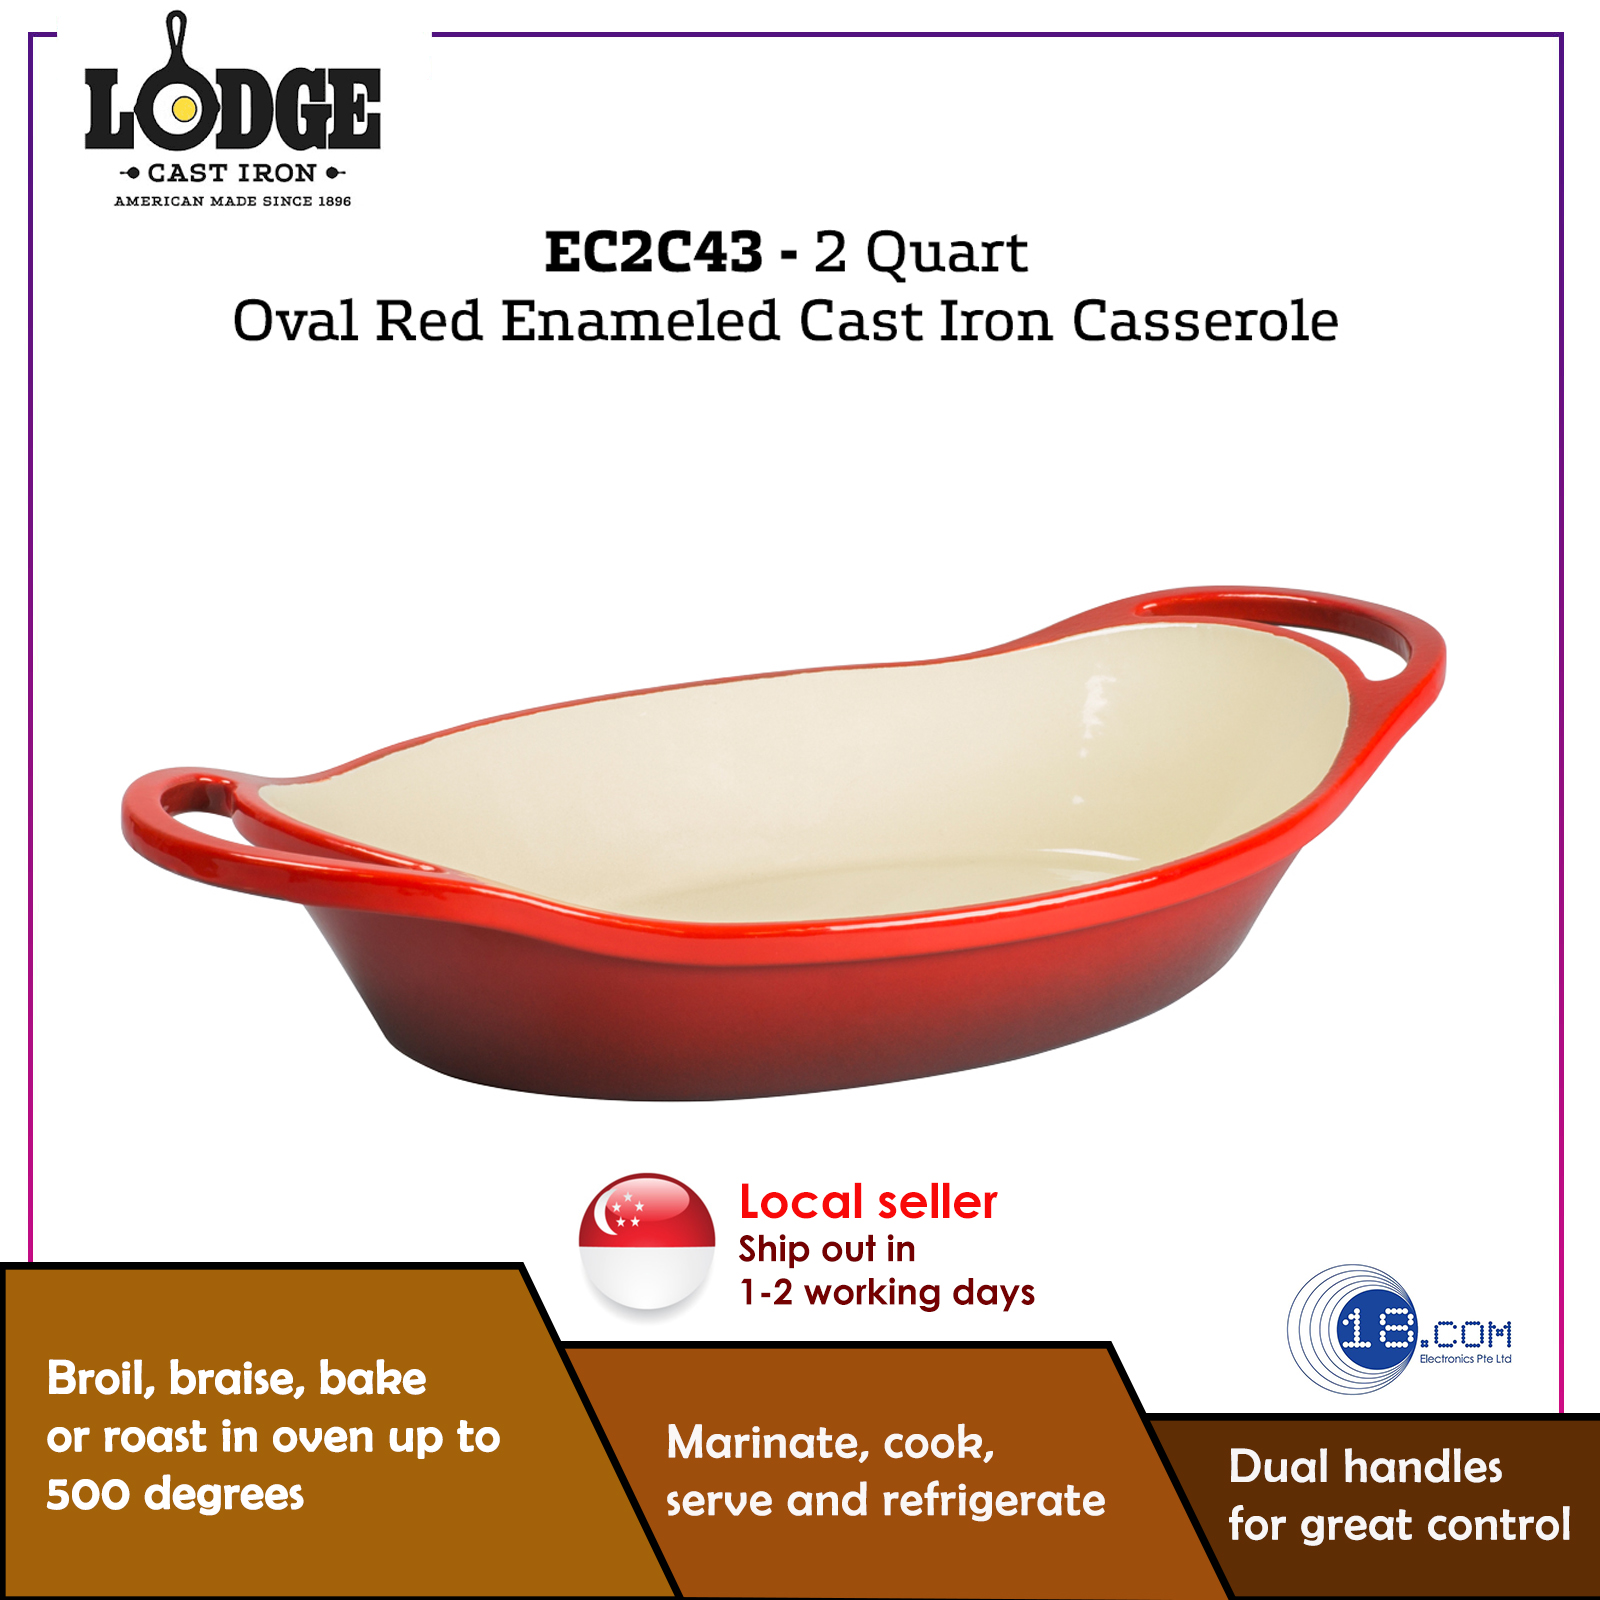 Lodge Cast Iron 2 Quart Enameled Oval Casserole Red